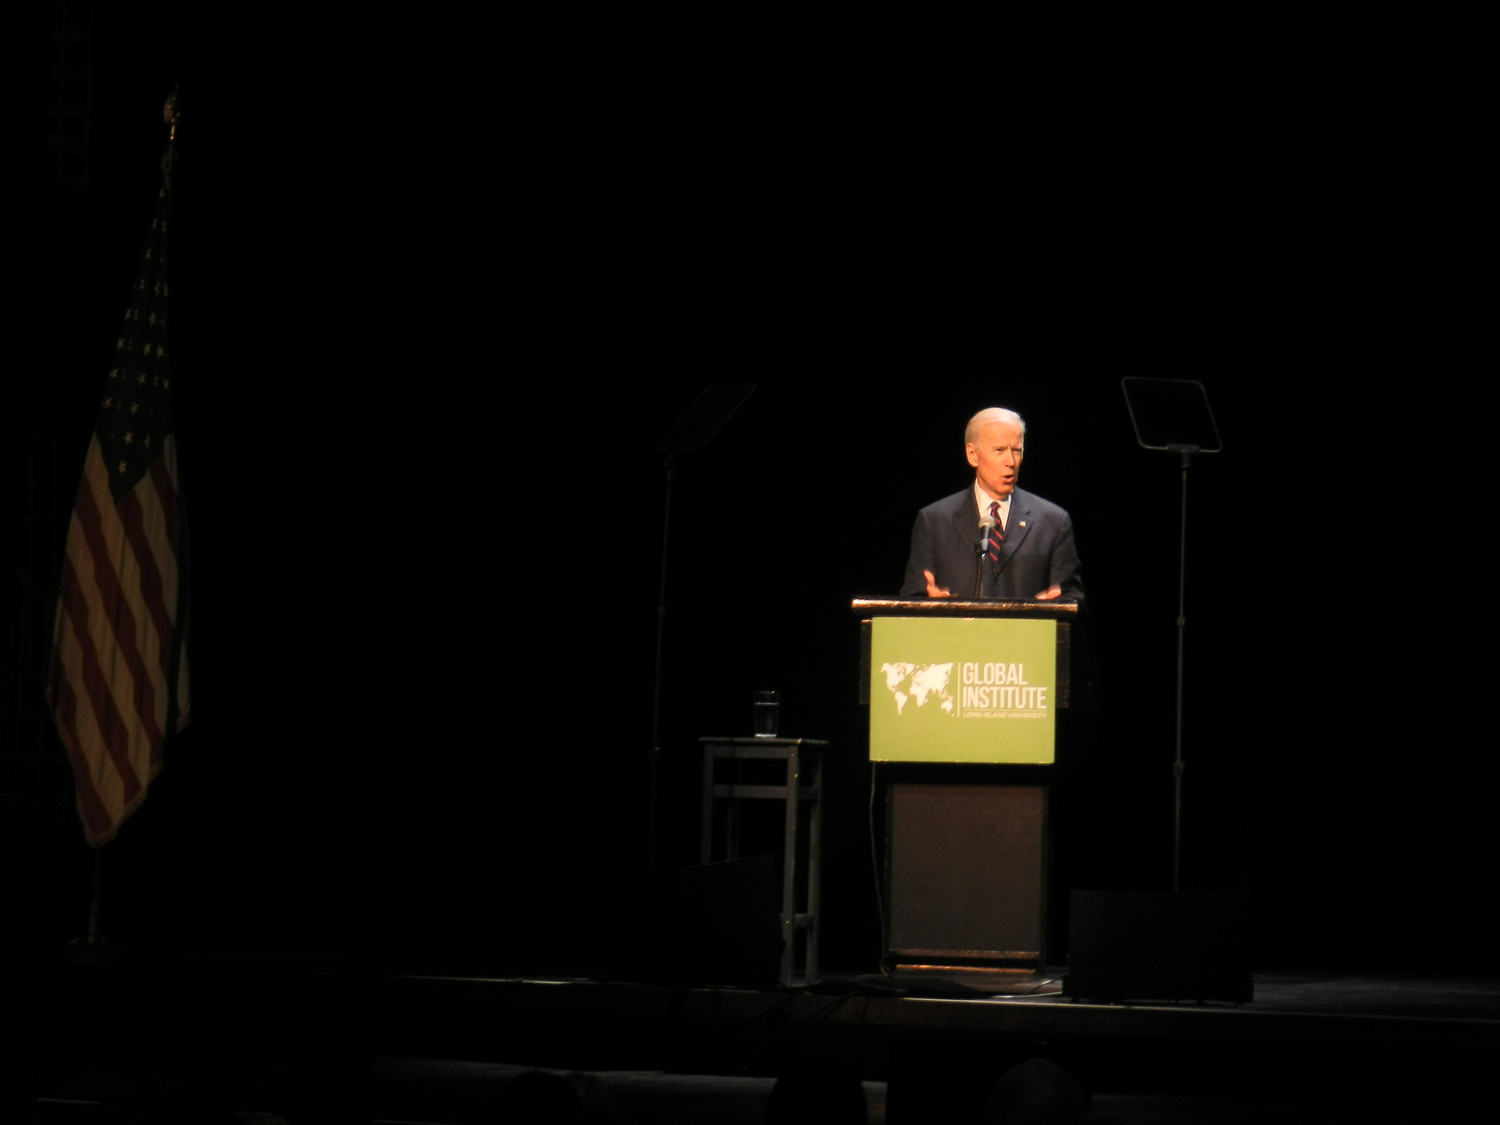 Former Vice President Joe Biden spoke at the Tilles Center as part of Long Island University’s Global Institute on March 27.